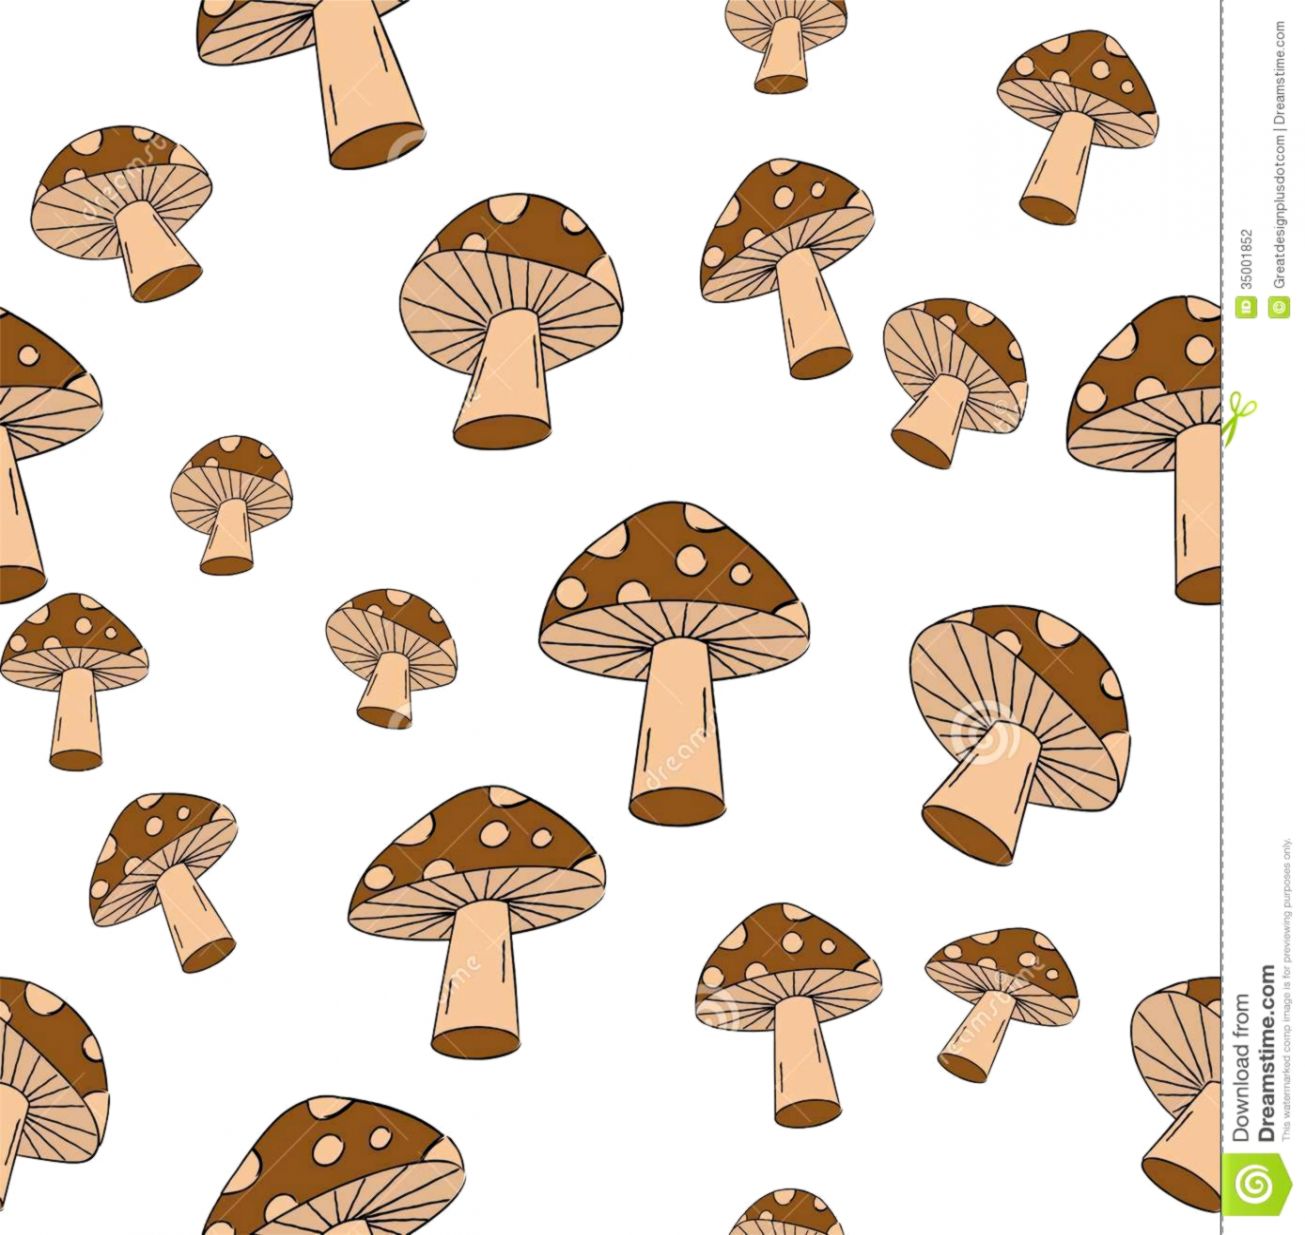 Mushrooms clipart wallpaper, Mushrooms wallpaper Transparent FREE for